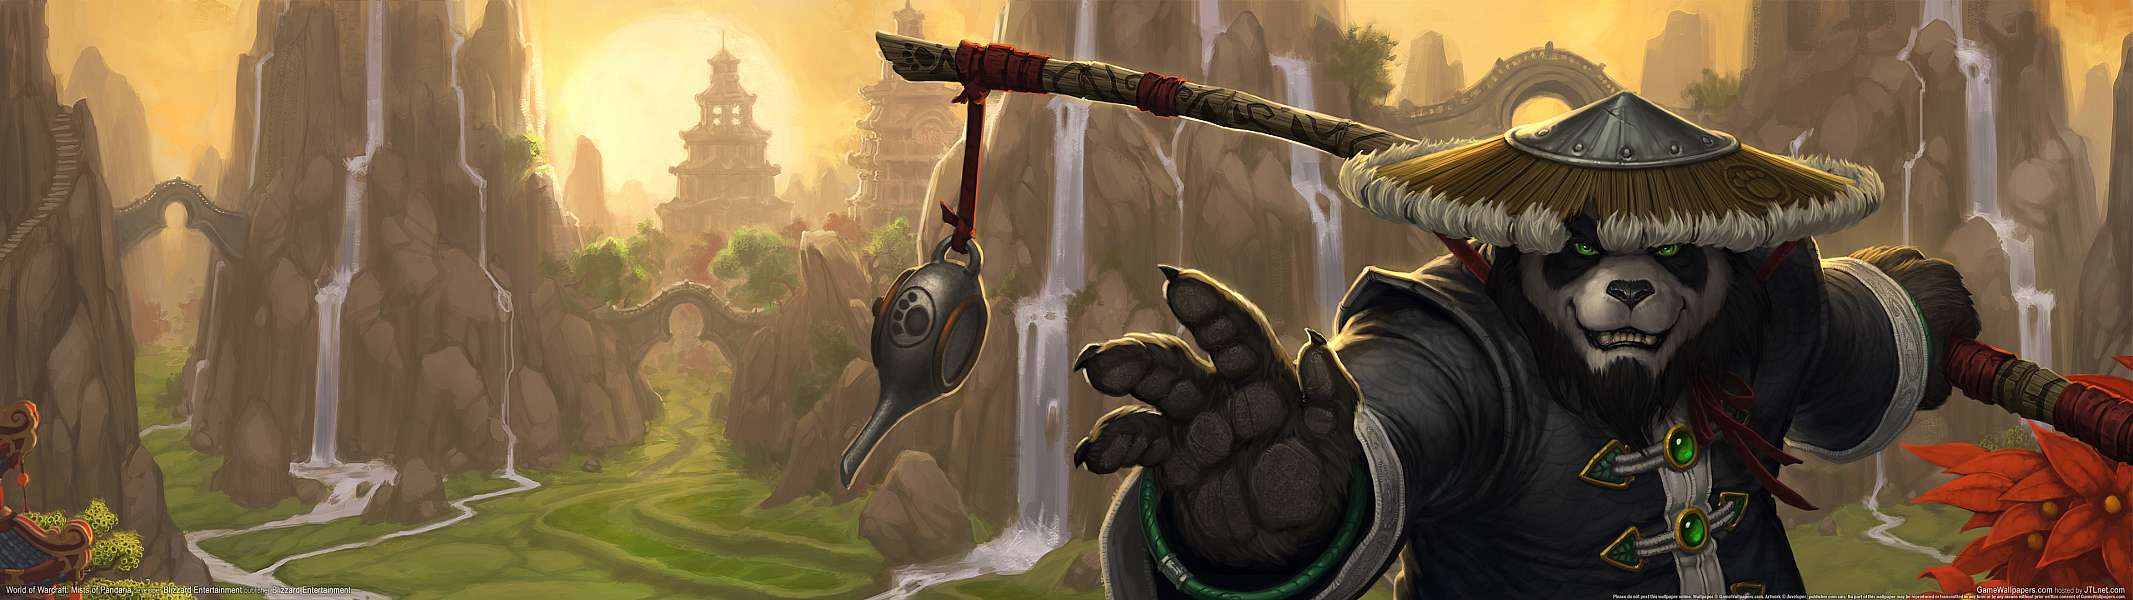 World of Warcraft: Mists of Pandaria dual screen fondo de escritorio